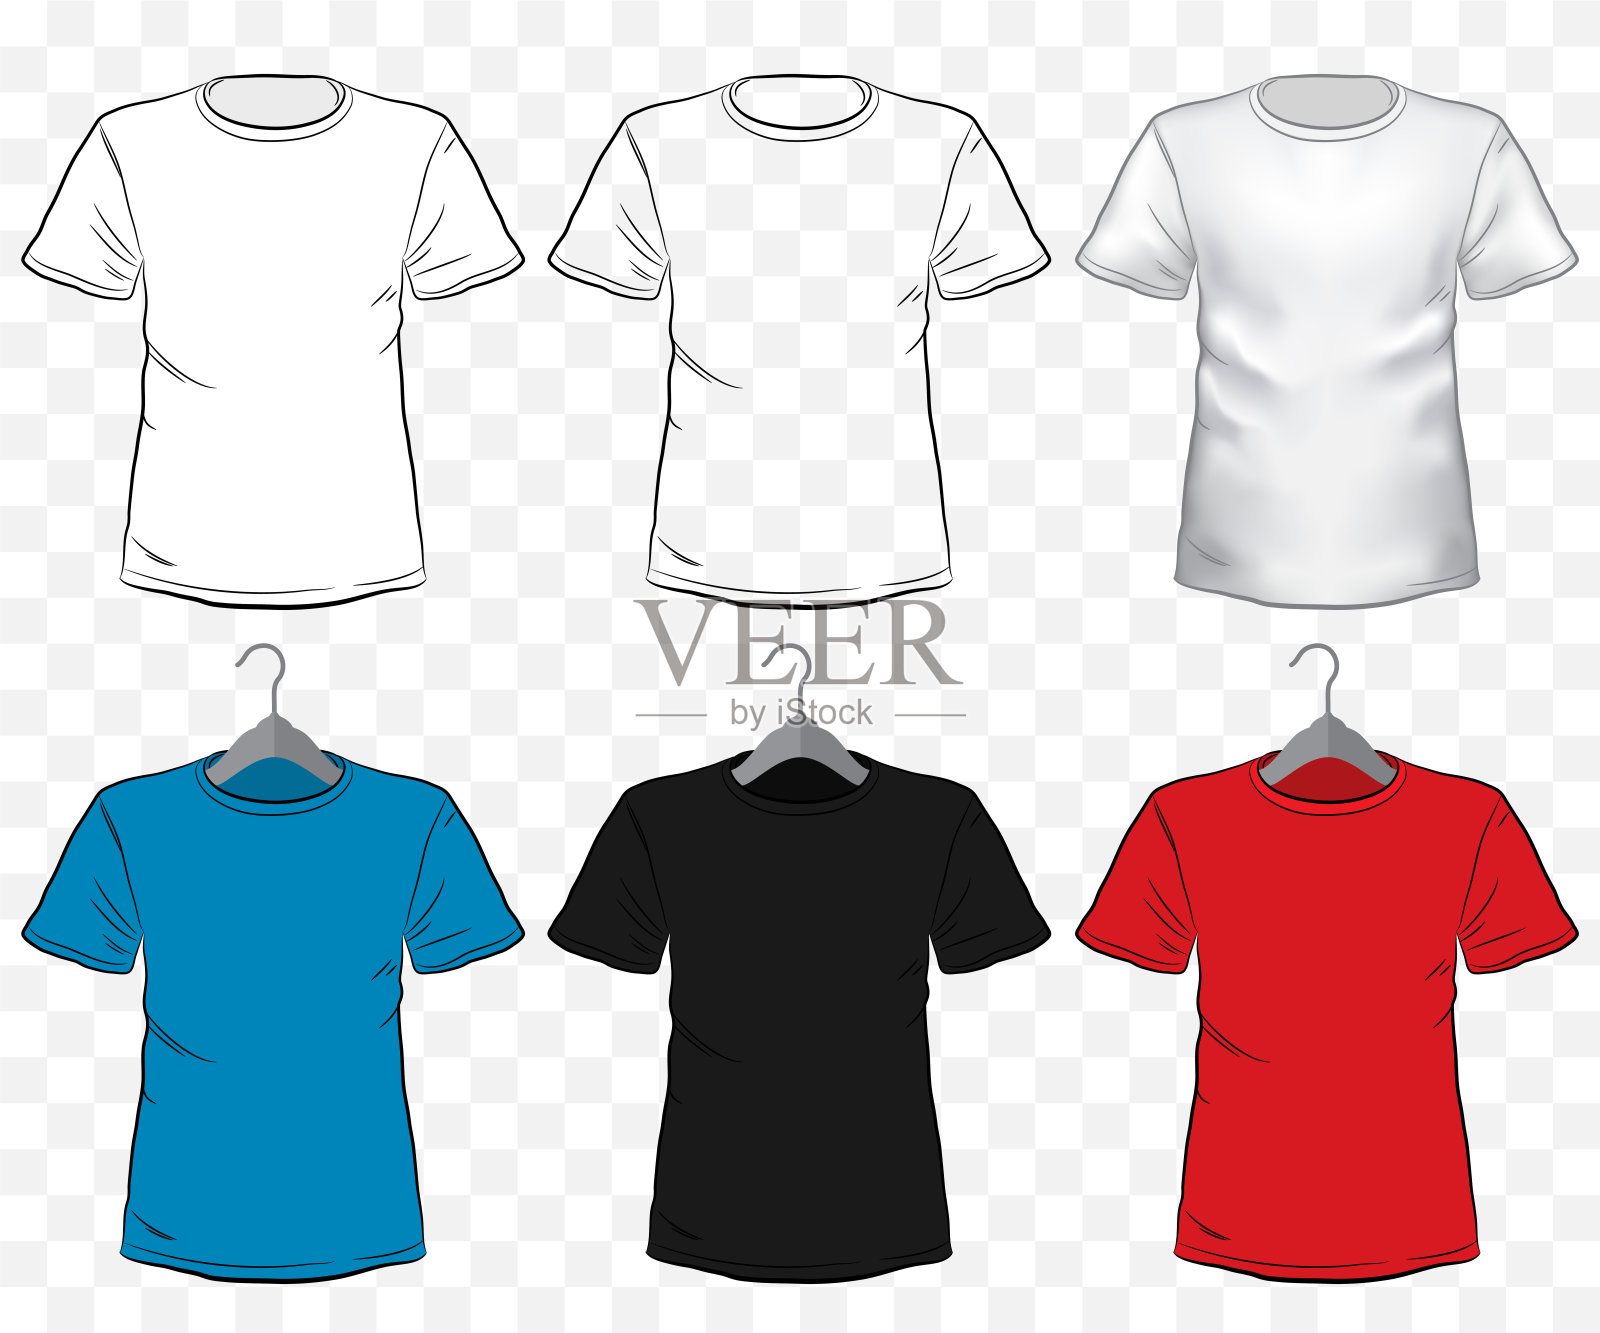 t恤模型矢量插图设置透明的背景。衣架上不同类型和颜色的短袖衬衫模板。插画图片素材